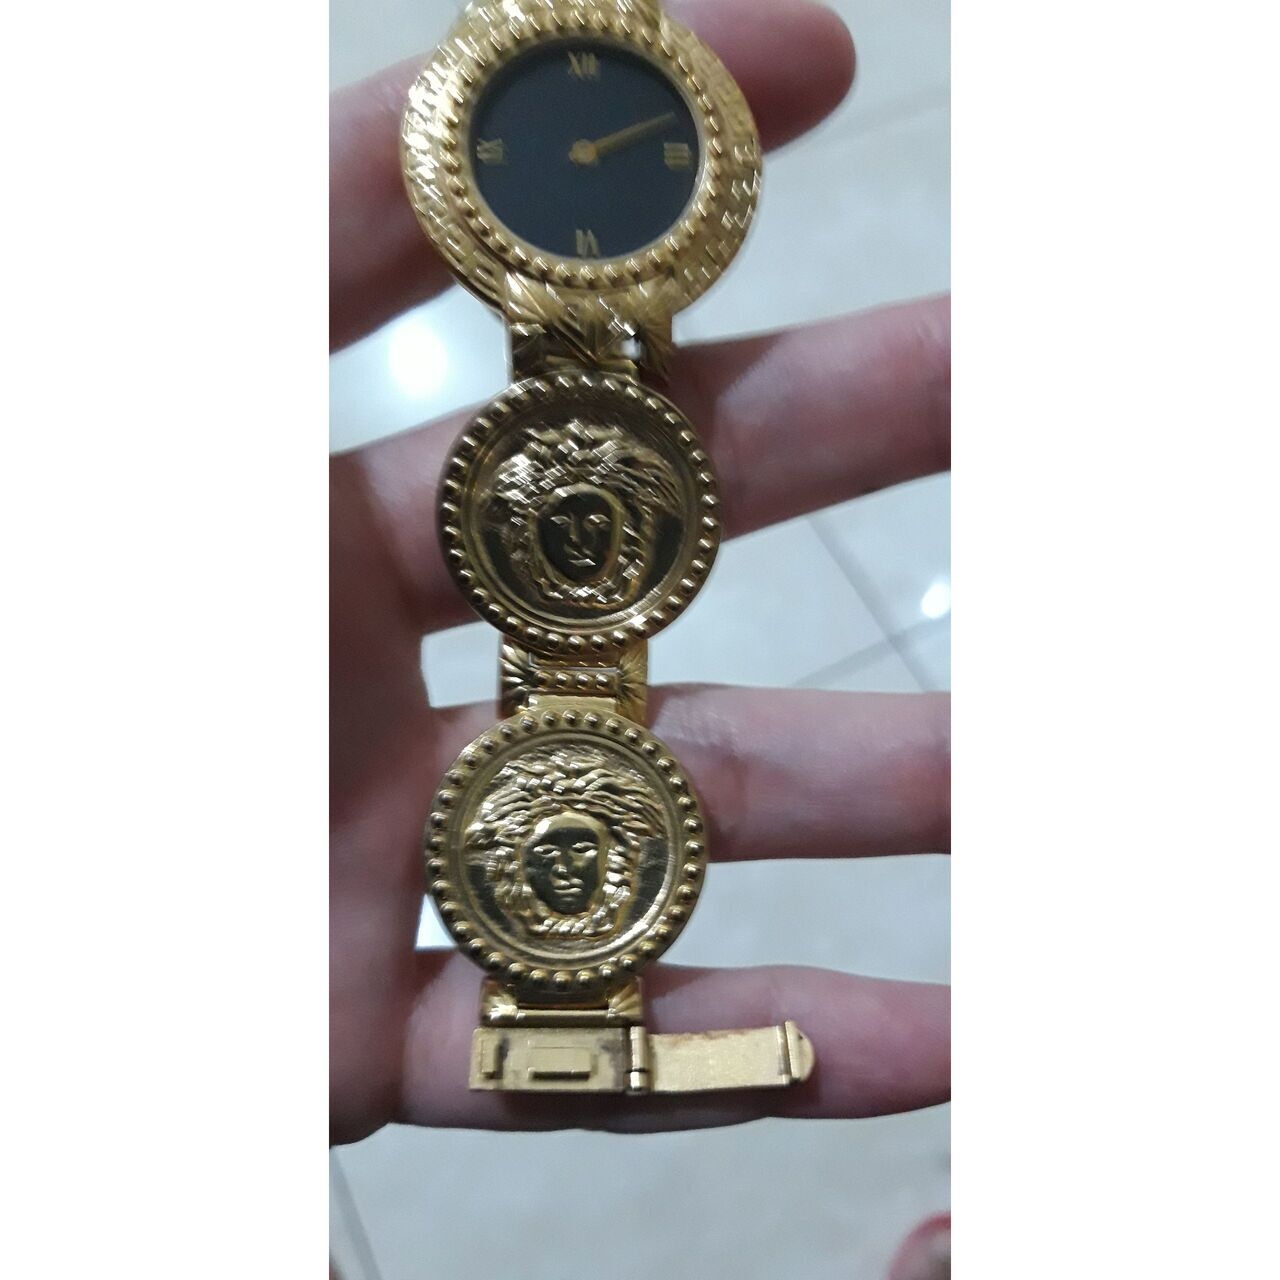 Gianni Versace Gold Watch